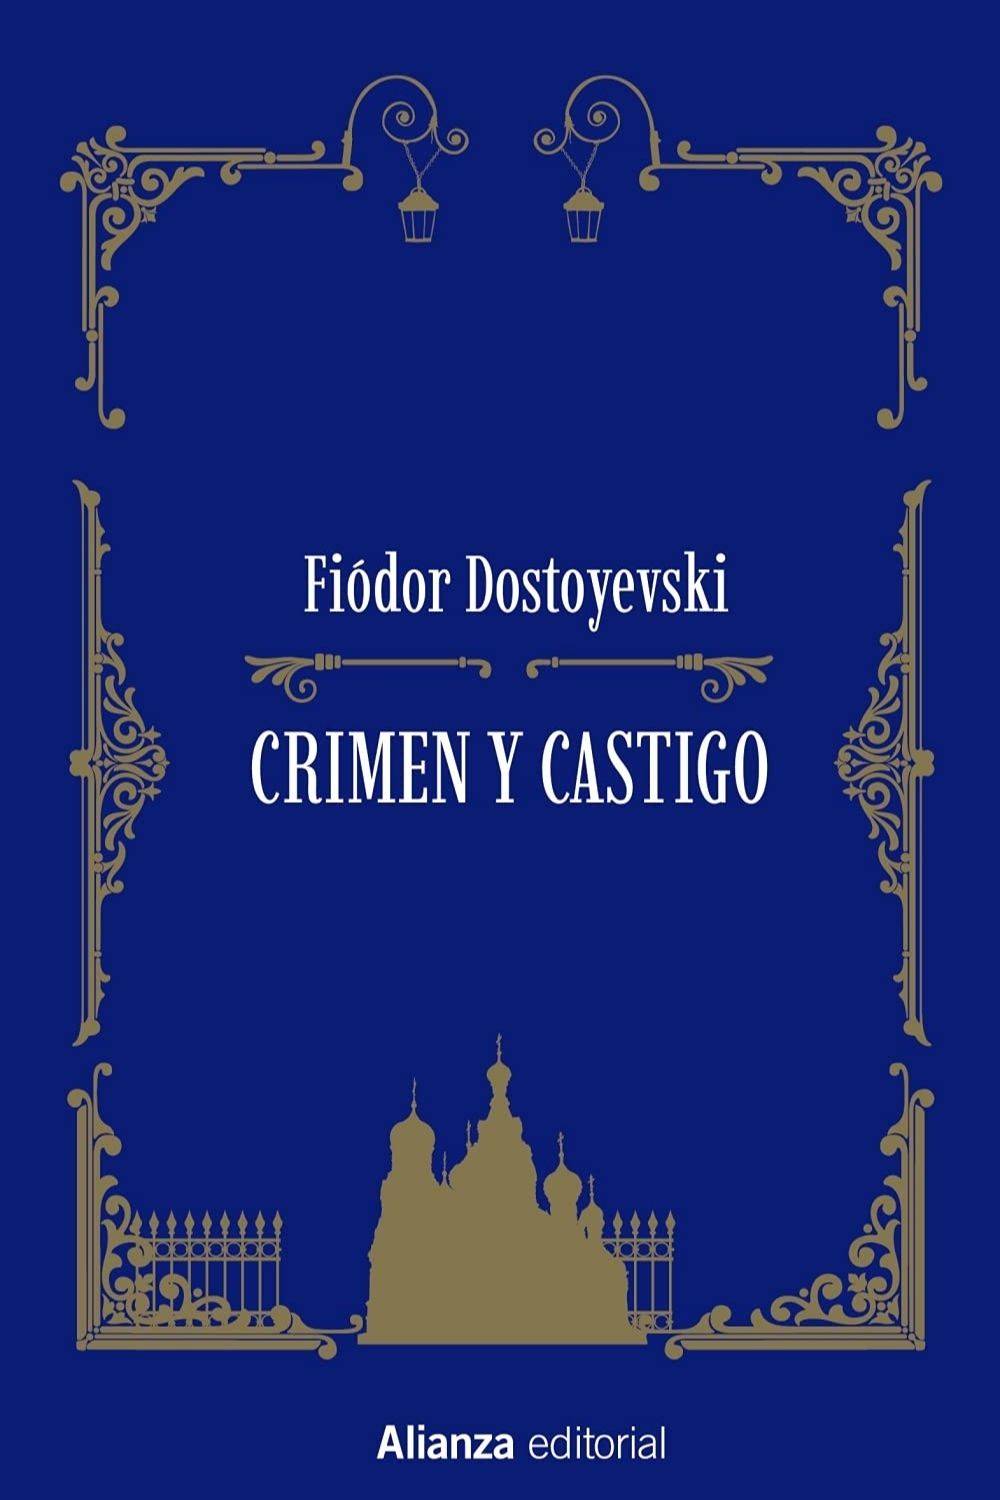 ‘Crimen y castigo’ de Fiódor Dostoyevski